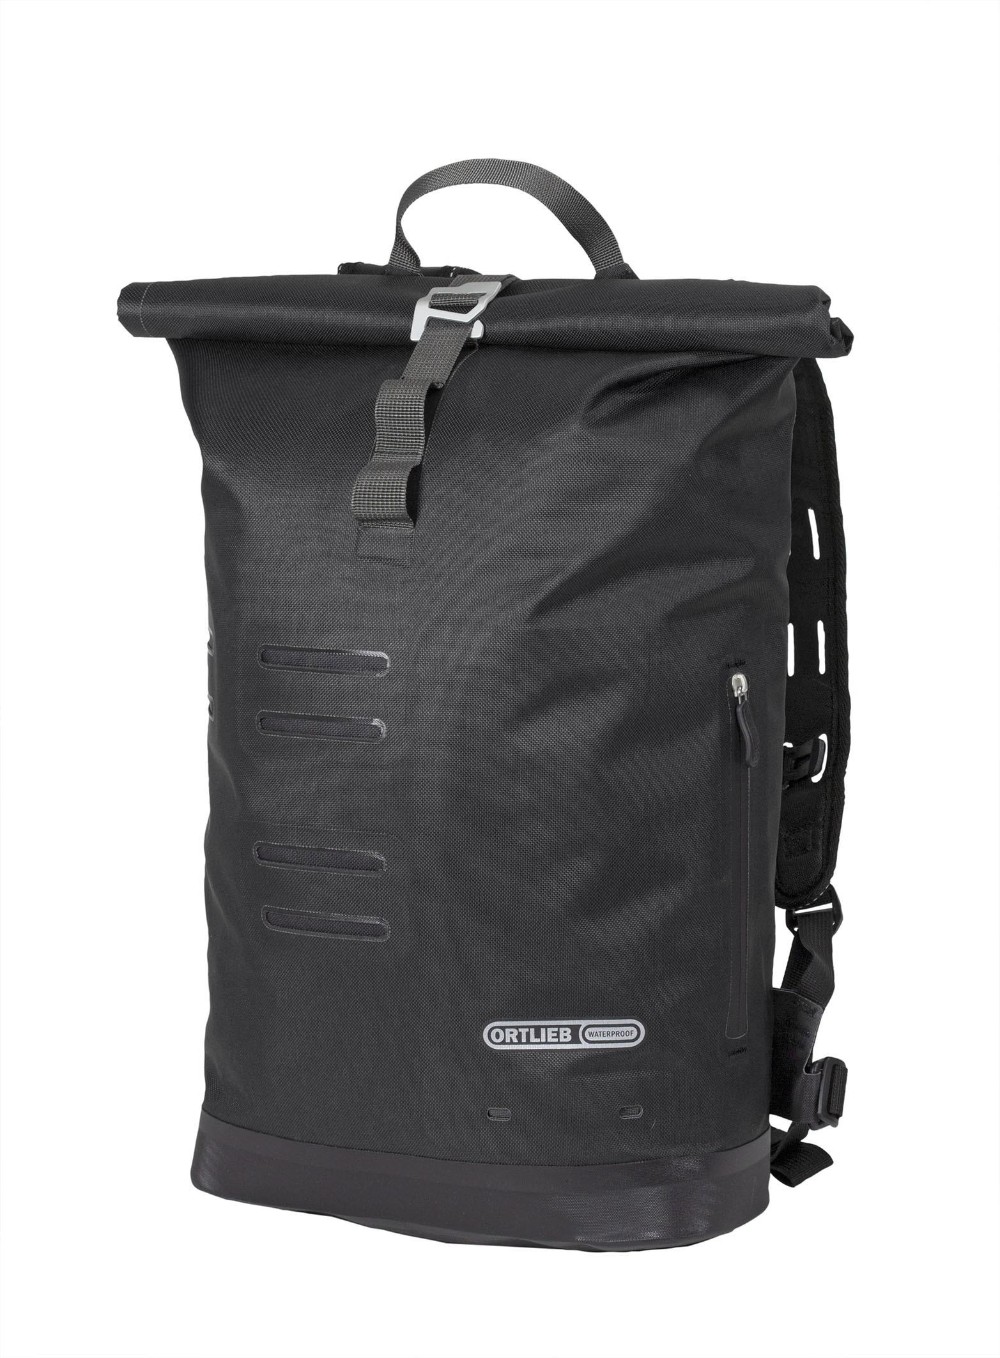 Commuter Daypack Backpack image 0